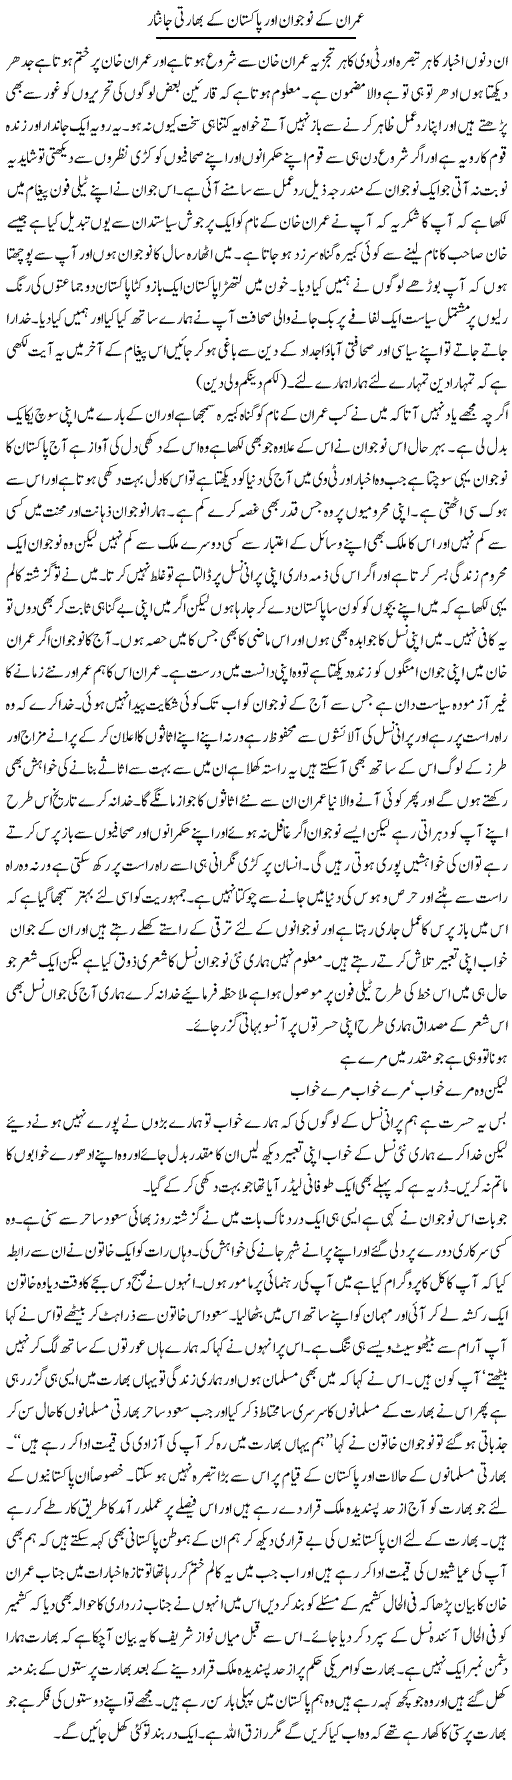 Imran Khan Express Column Abdul Qadir 15 November 2011